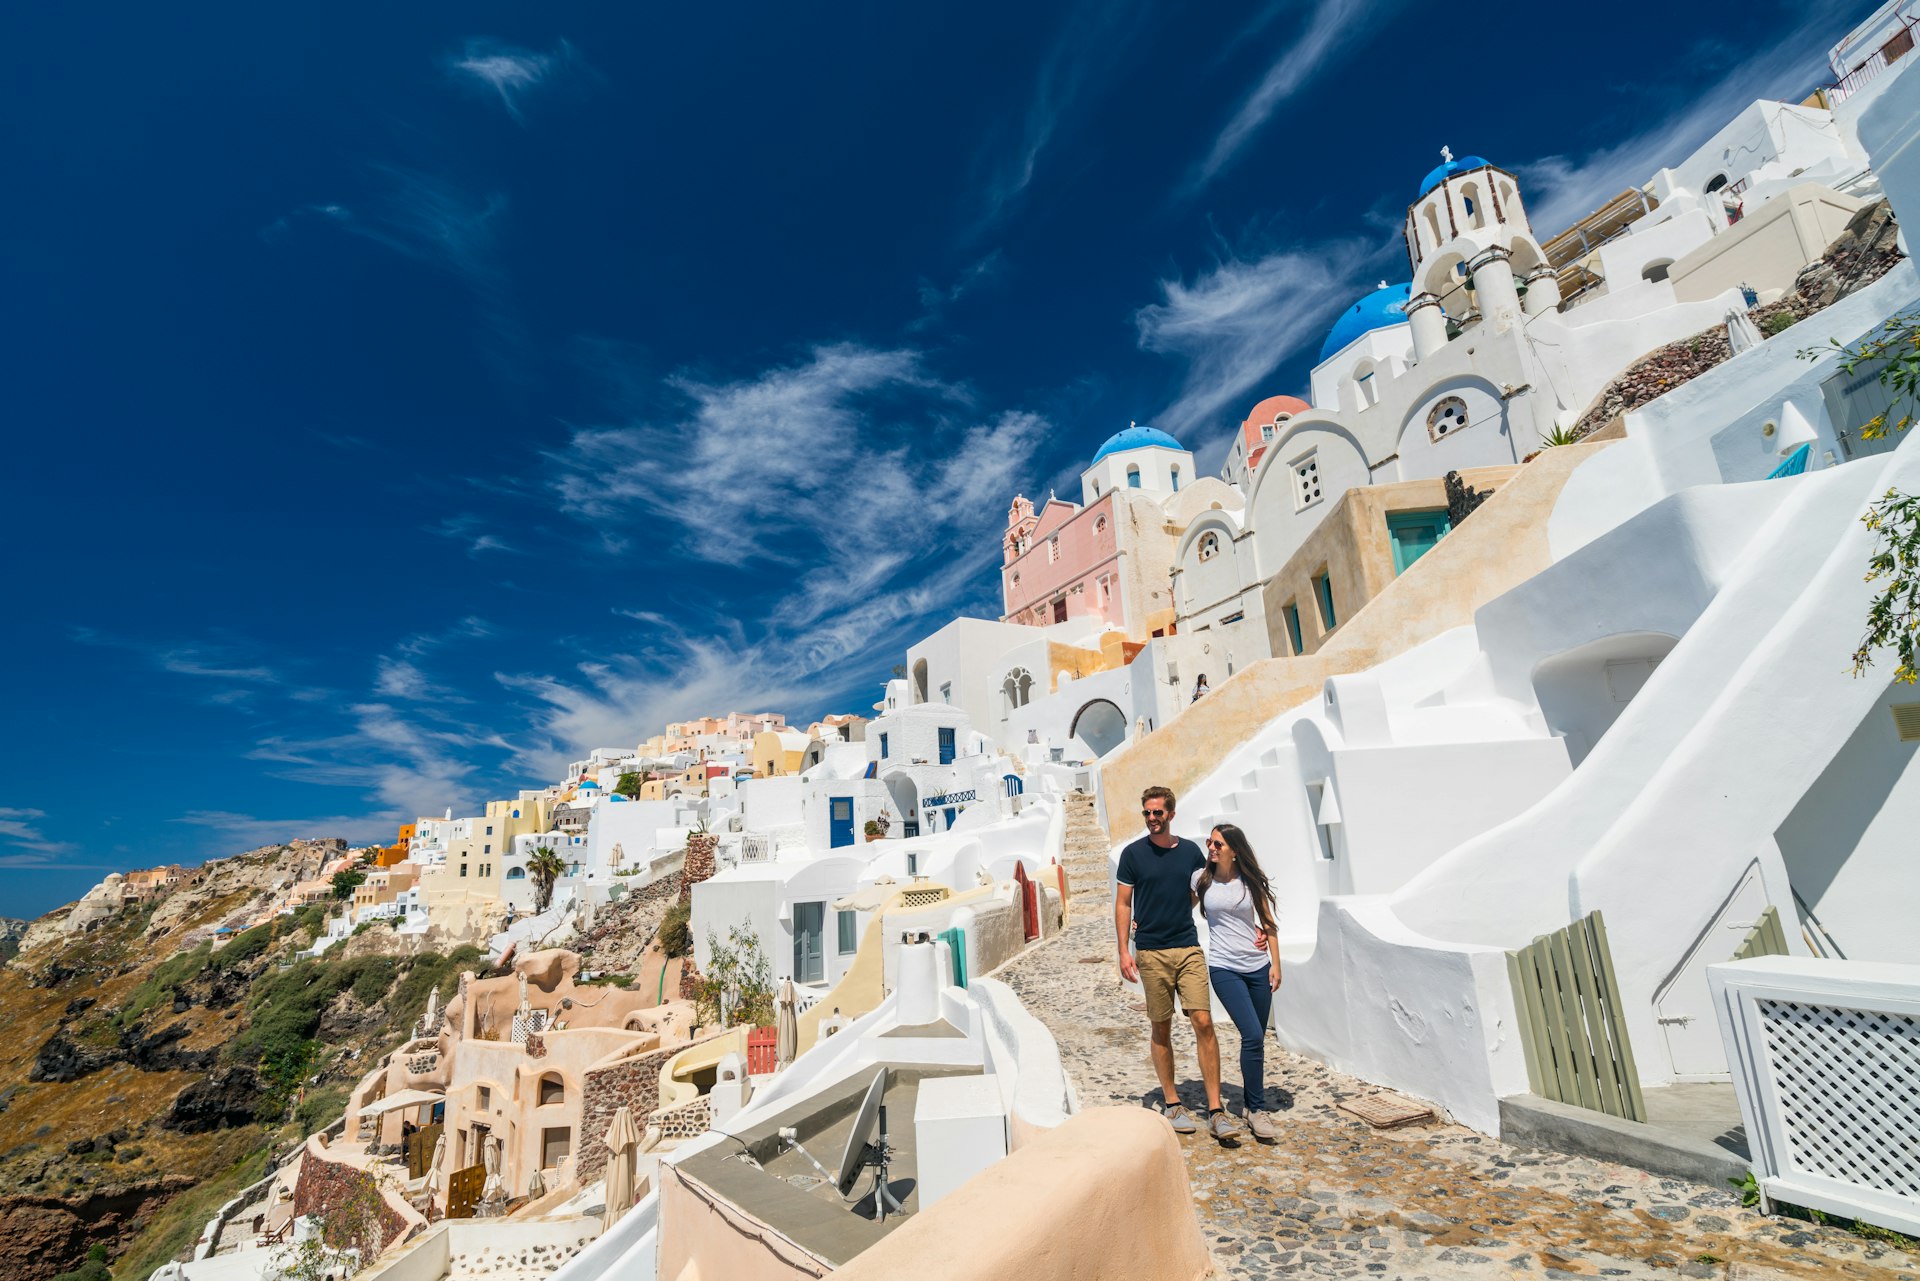 A couple walks among the iconic white buildings of Oia, Santorini, Cyclades, Greece